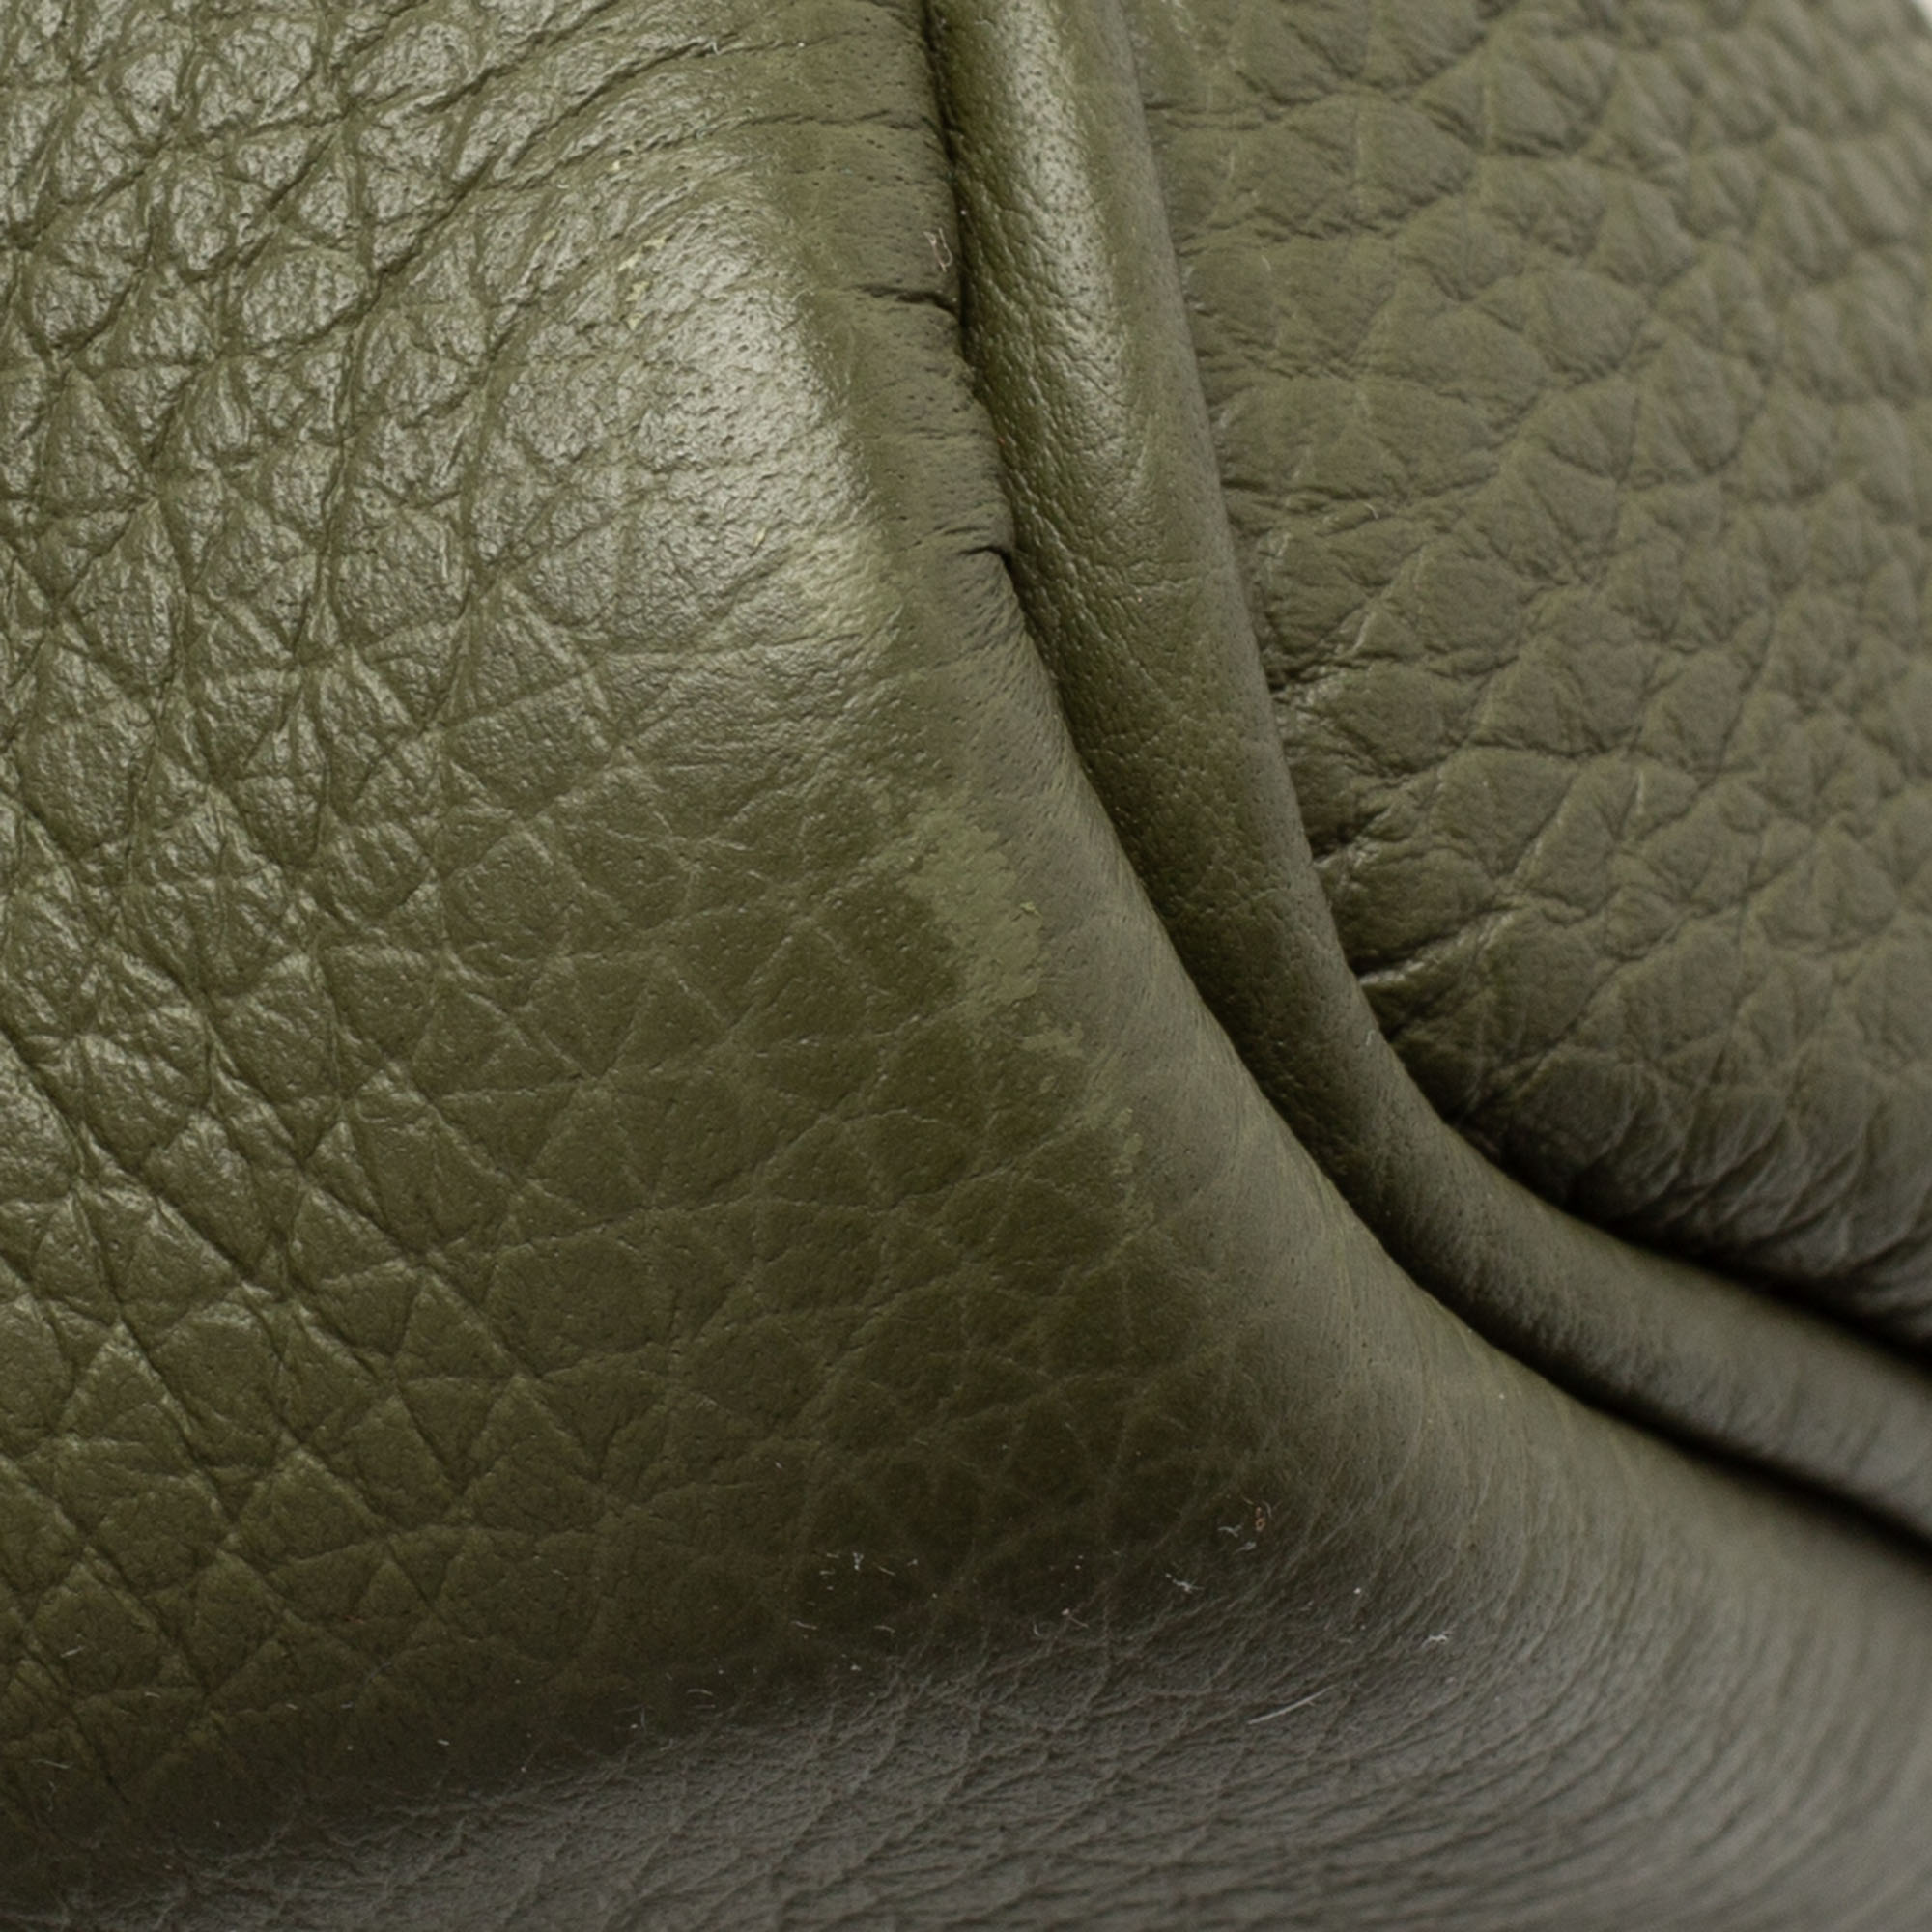 Hermes HAC (Haut à Courroies) Birkin 40 Bag Vert Veronese Togo Leather –  Mightychic